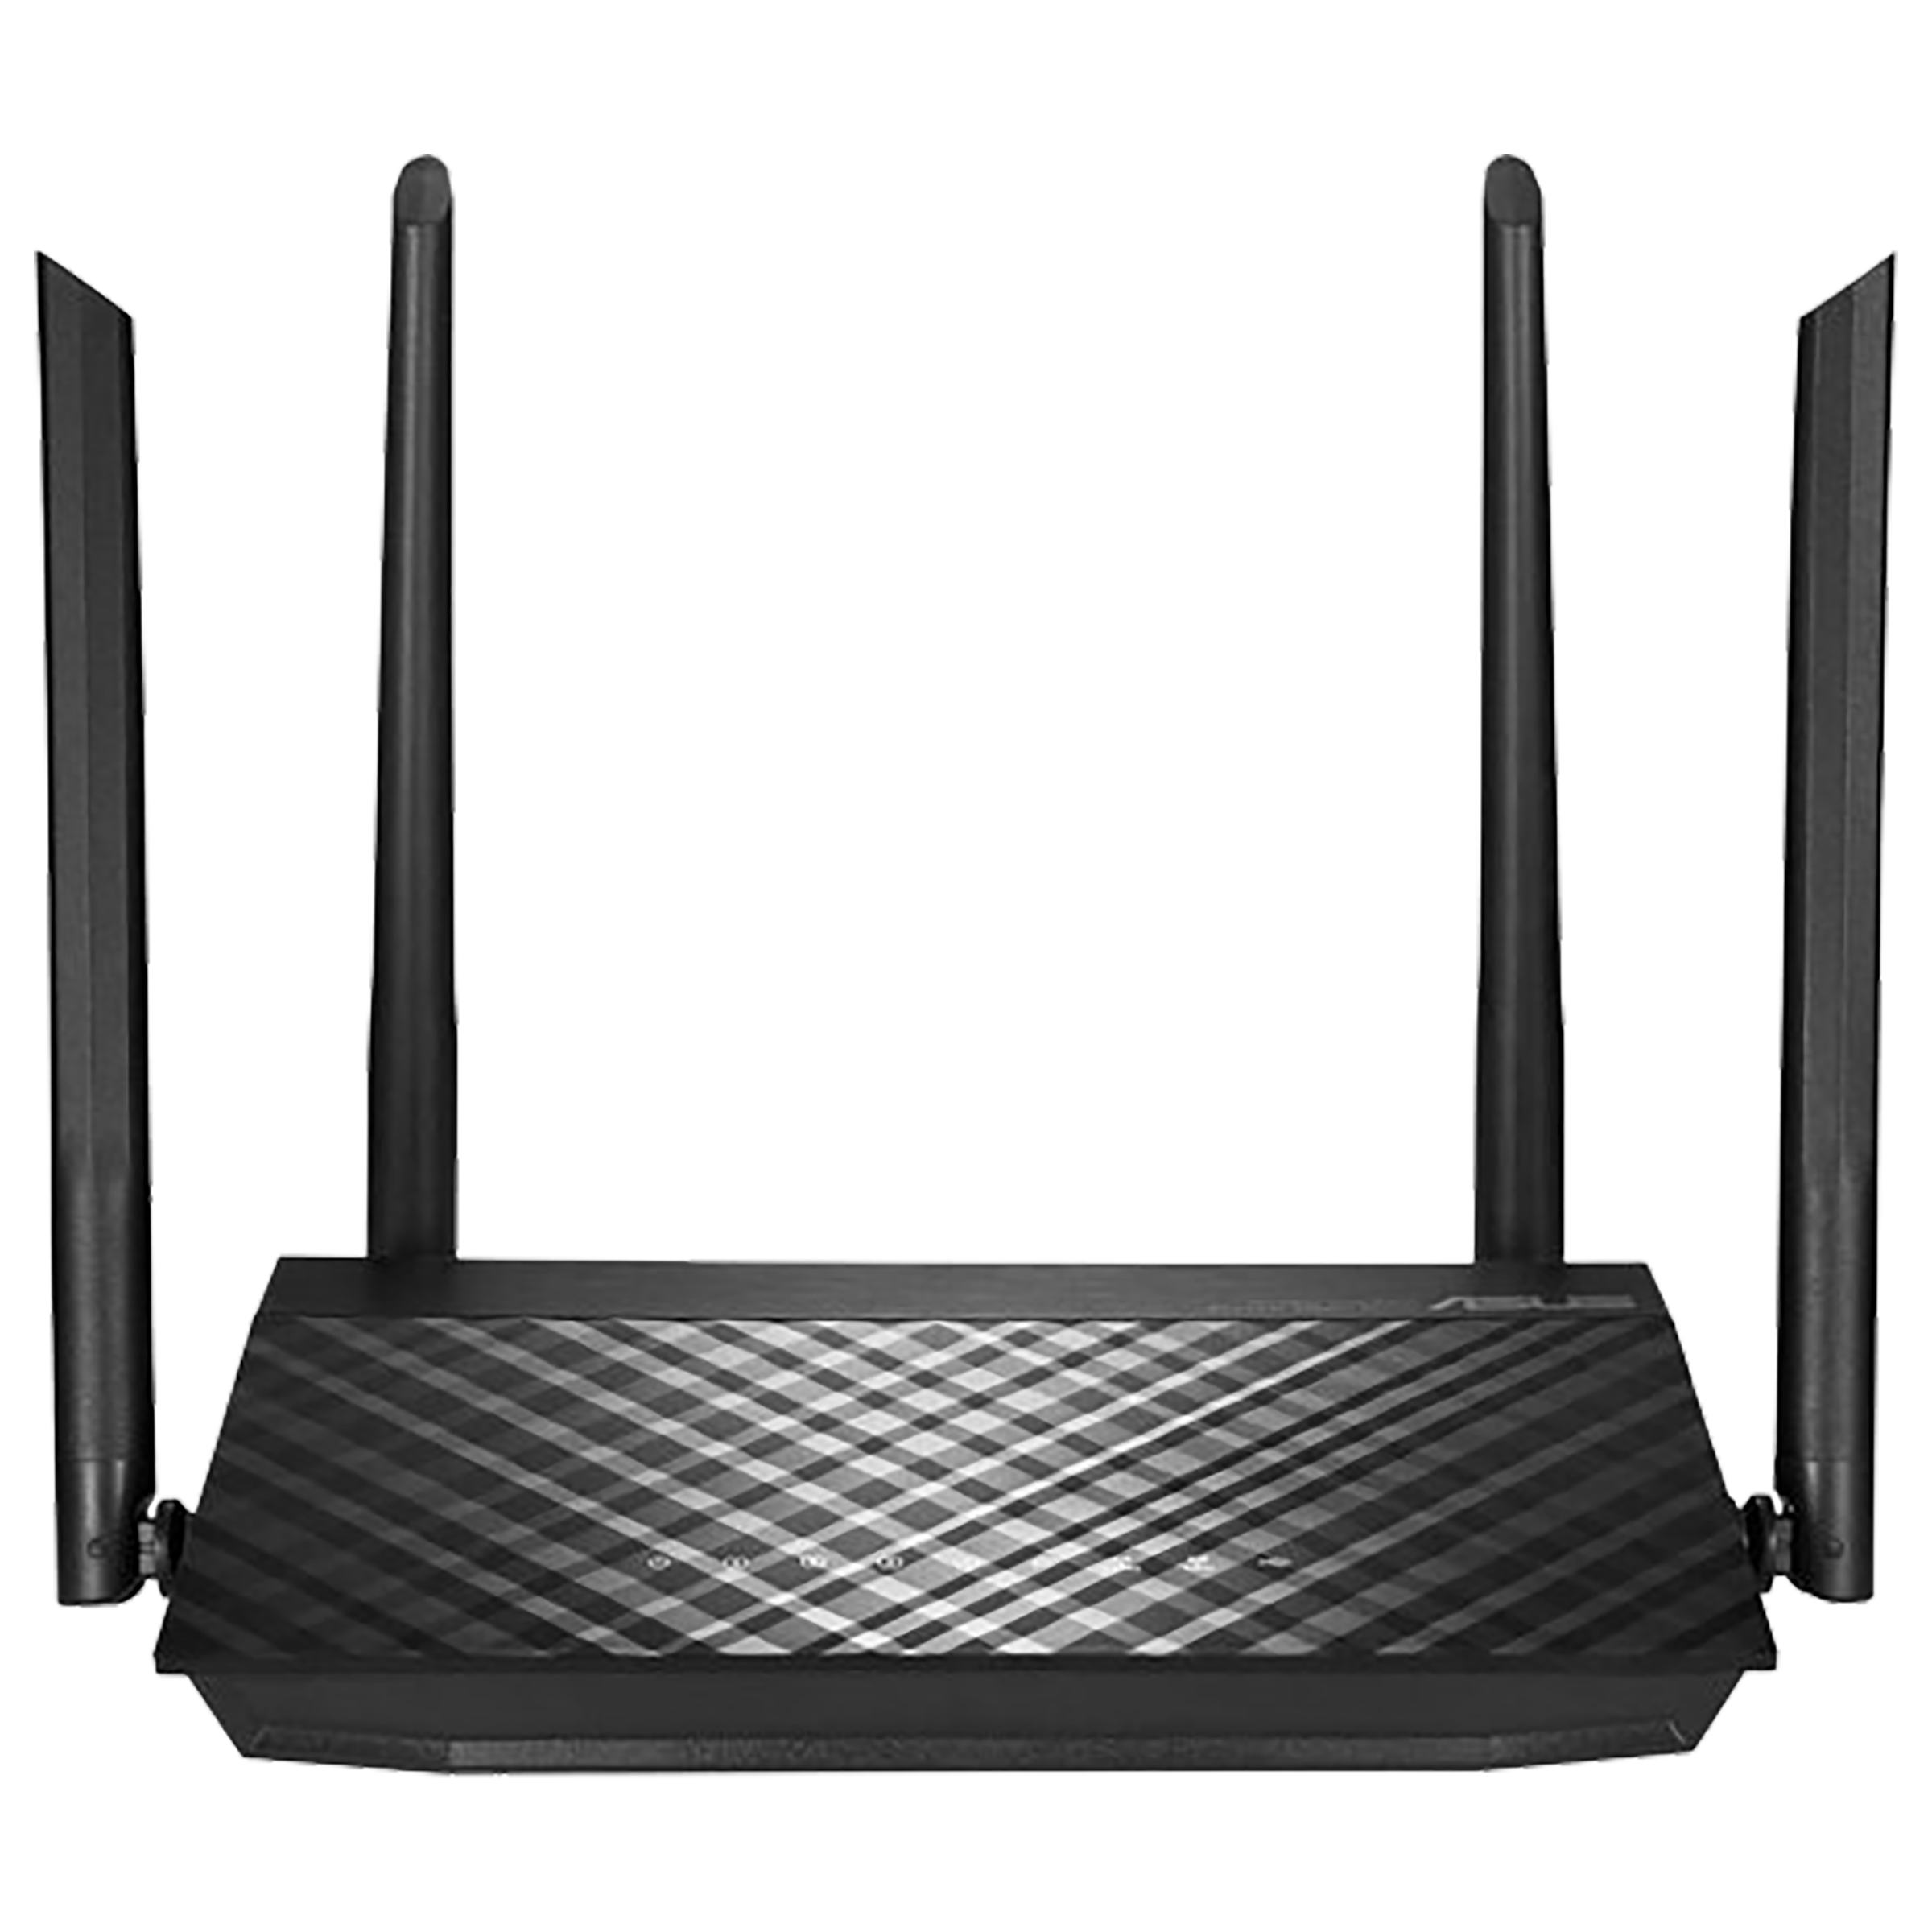 Asus Dual Band 867 Mbps WiFi Router (4 Antennas, Traffic Analyzer, RT-AC59U V2, Black)_1